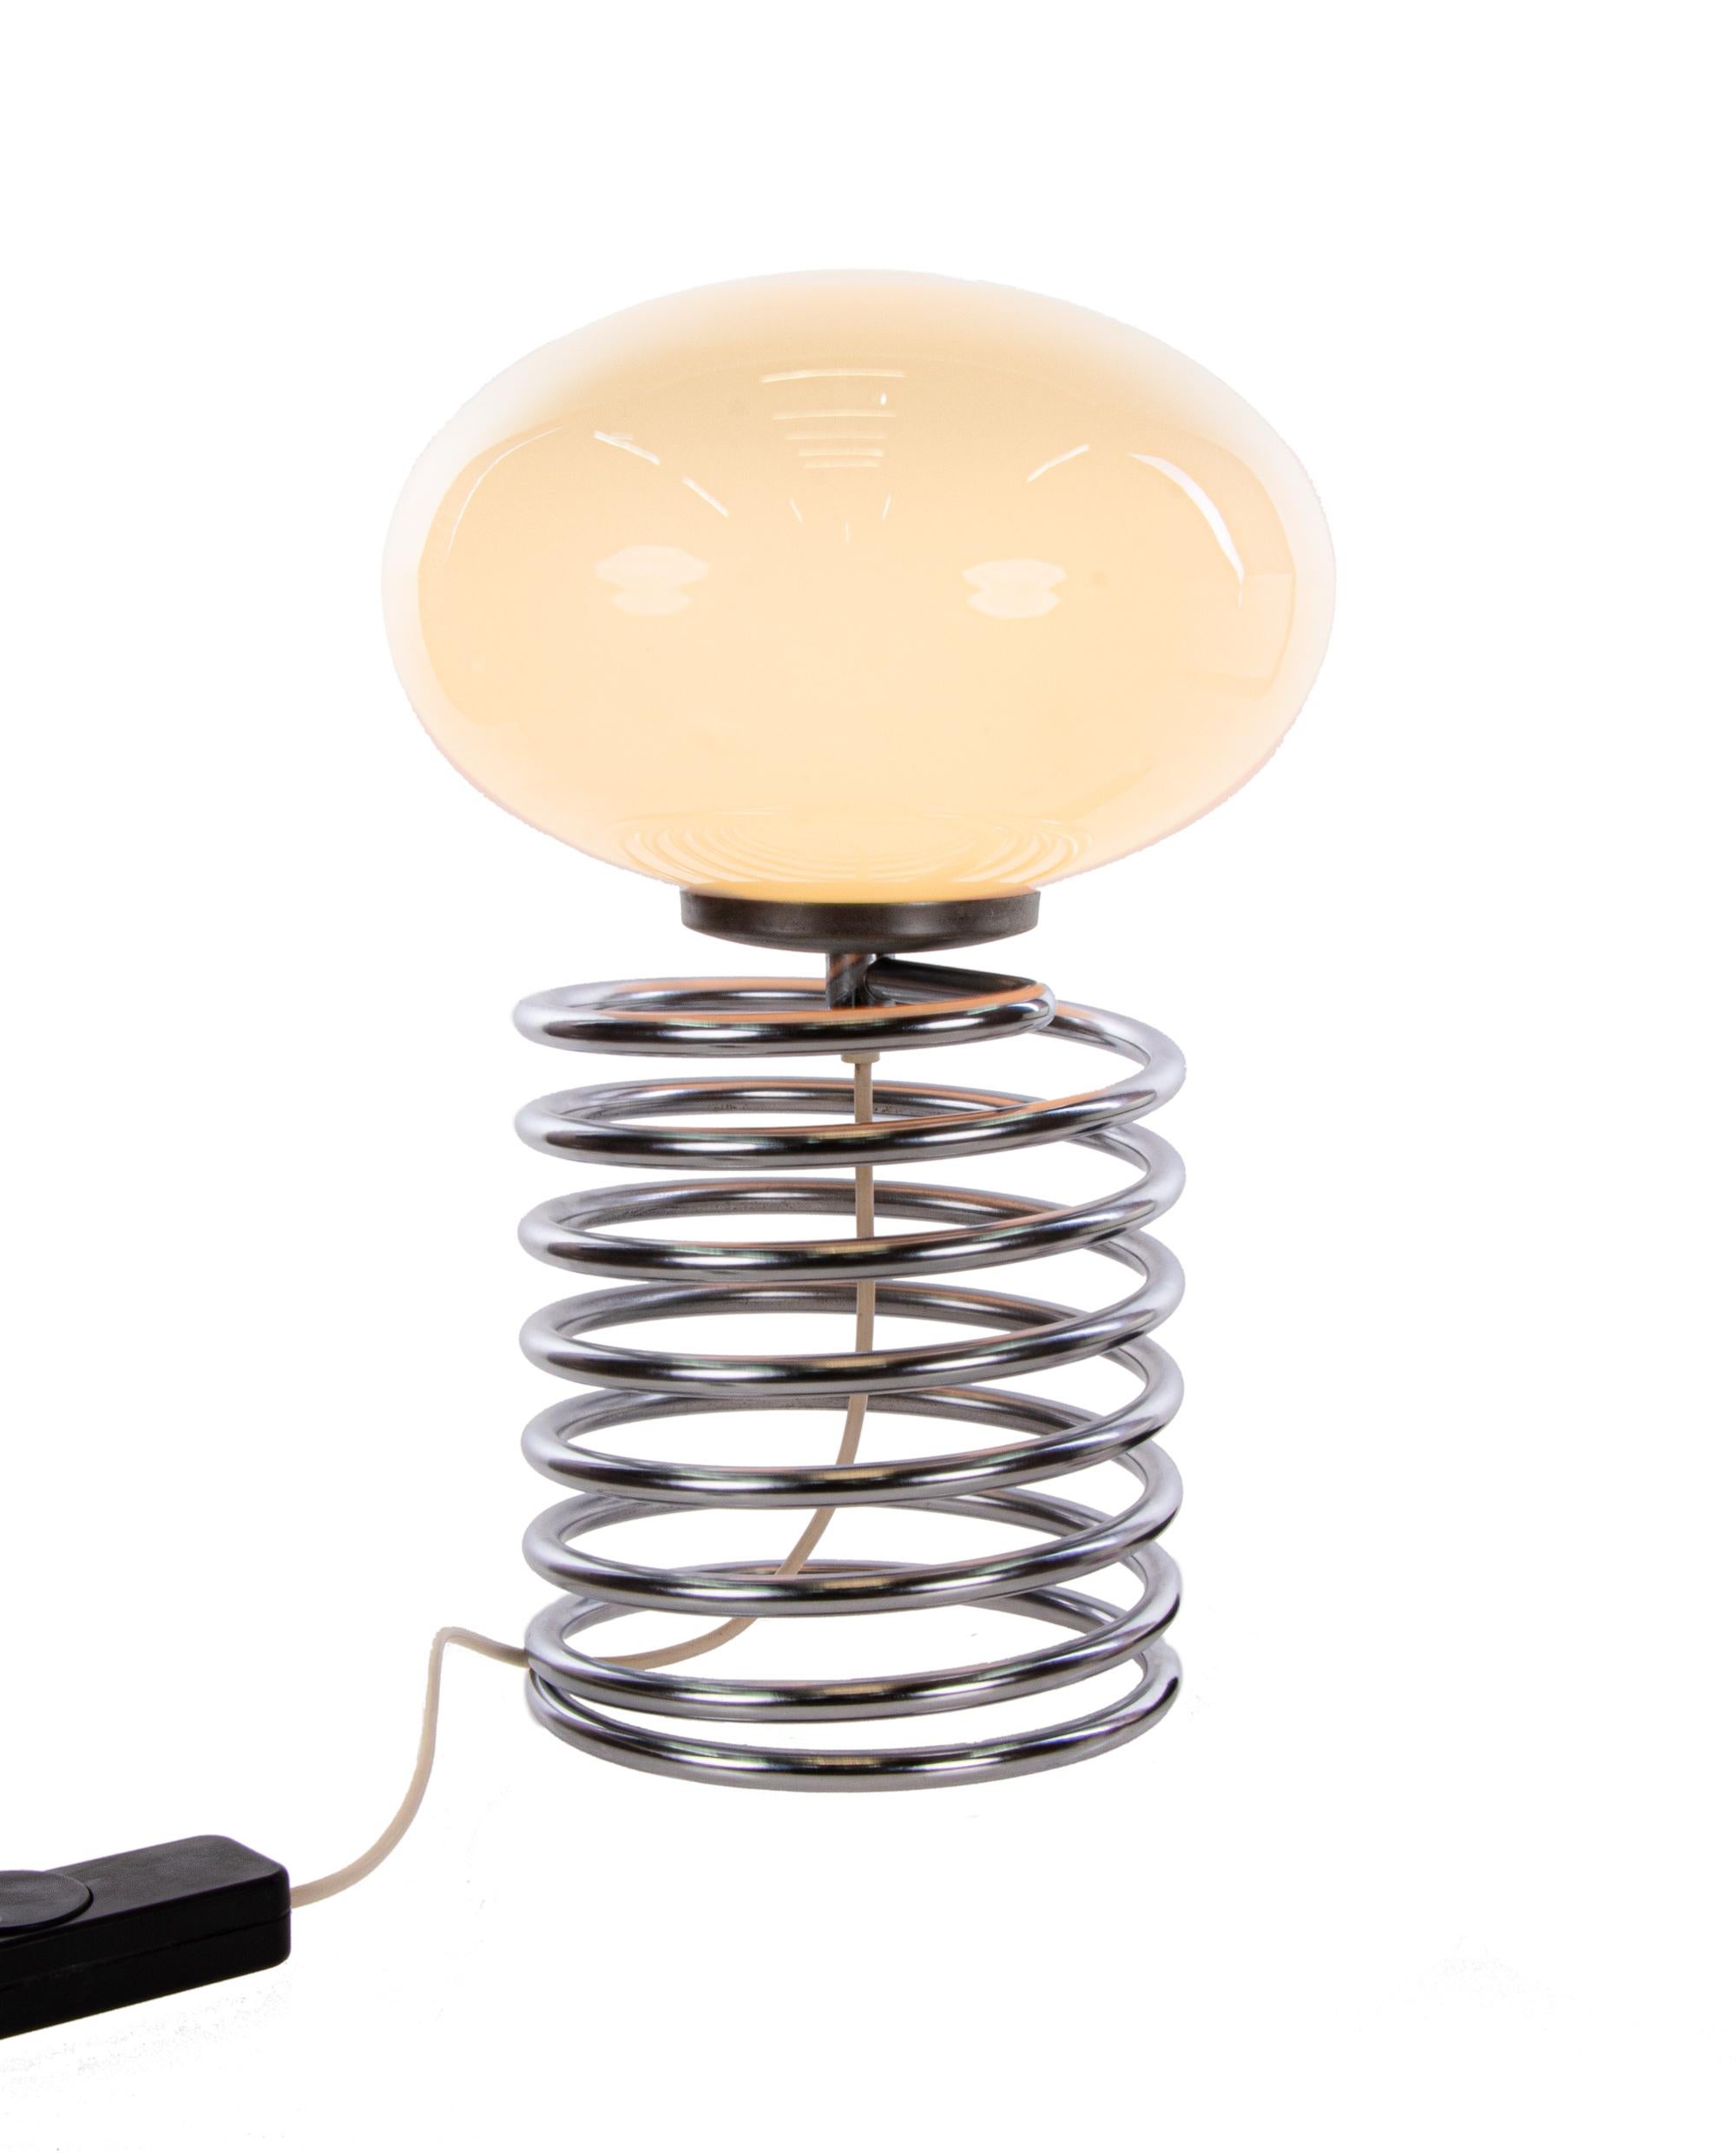 1965 Design M Ingo Maurer Medium Table Lamp 'Spirale' Glass & Chrome